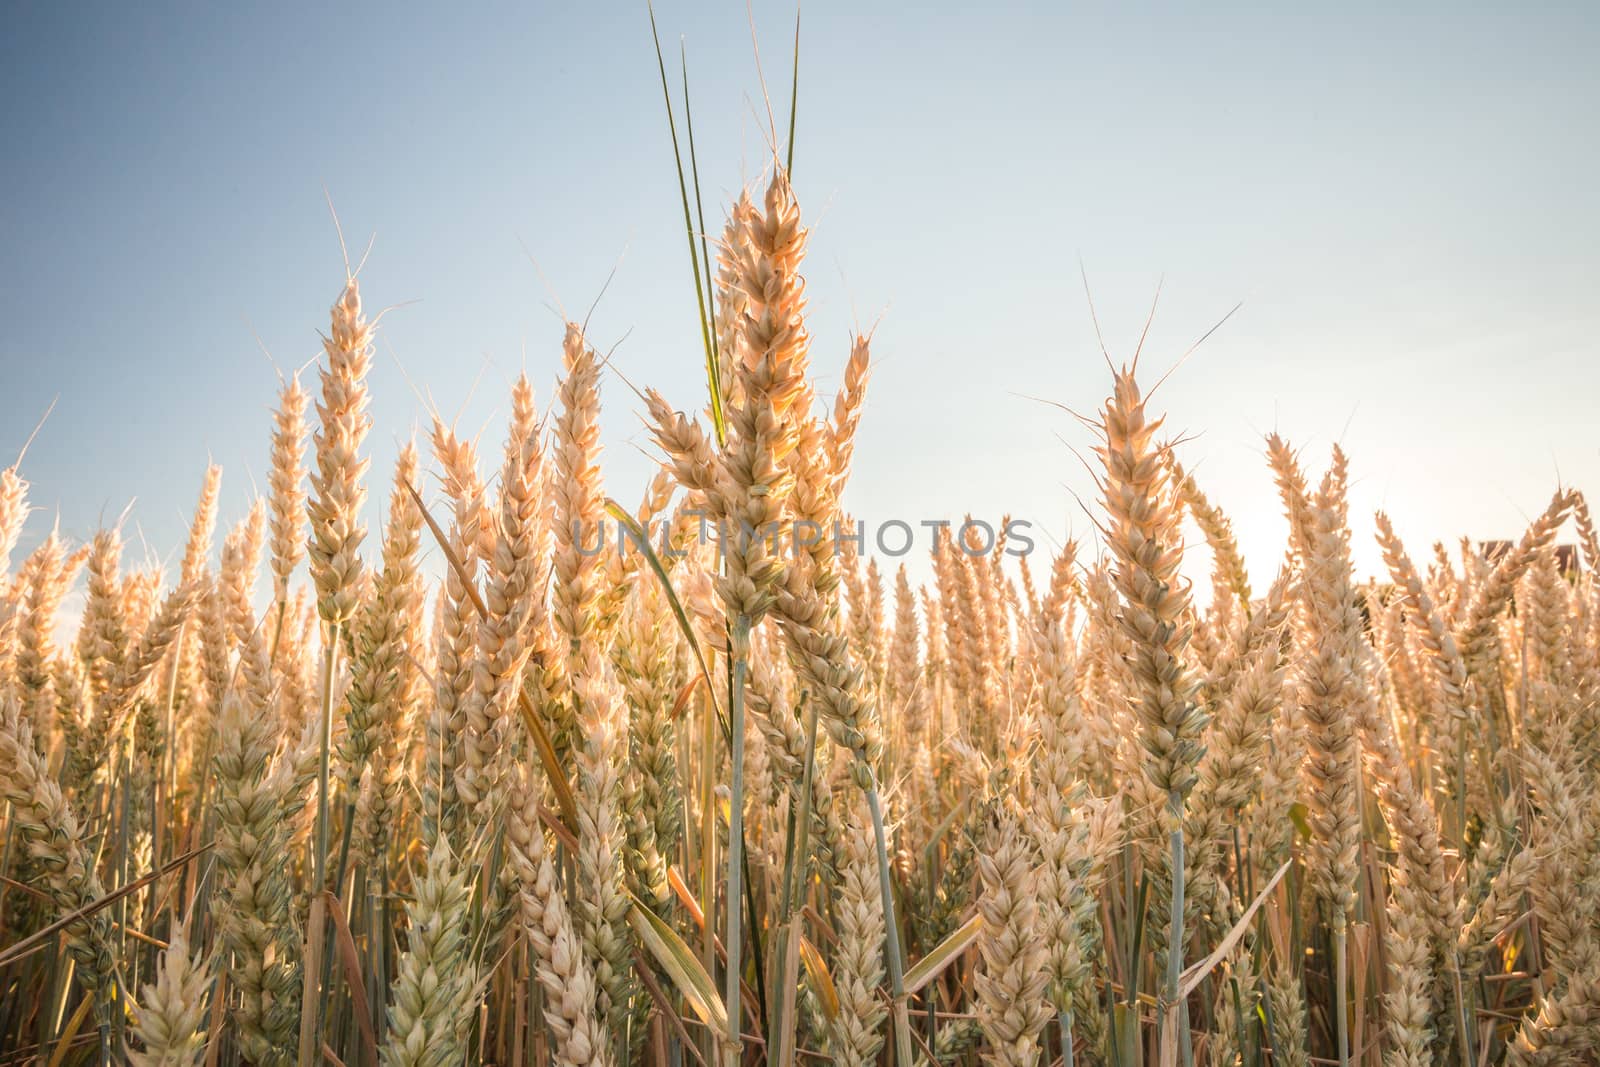 Wheat field. Ears of golden wheat close up. Background of ripening ears of meadow wheat field.